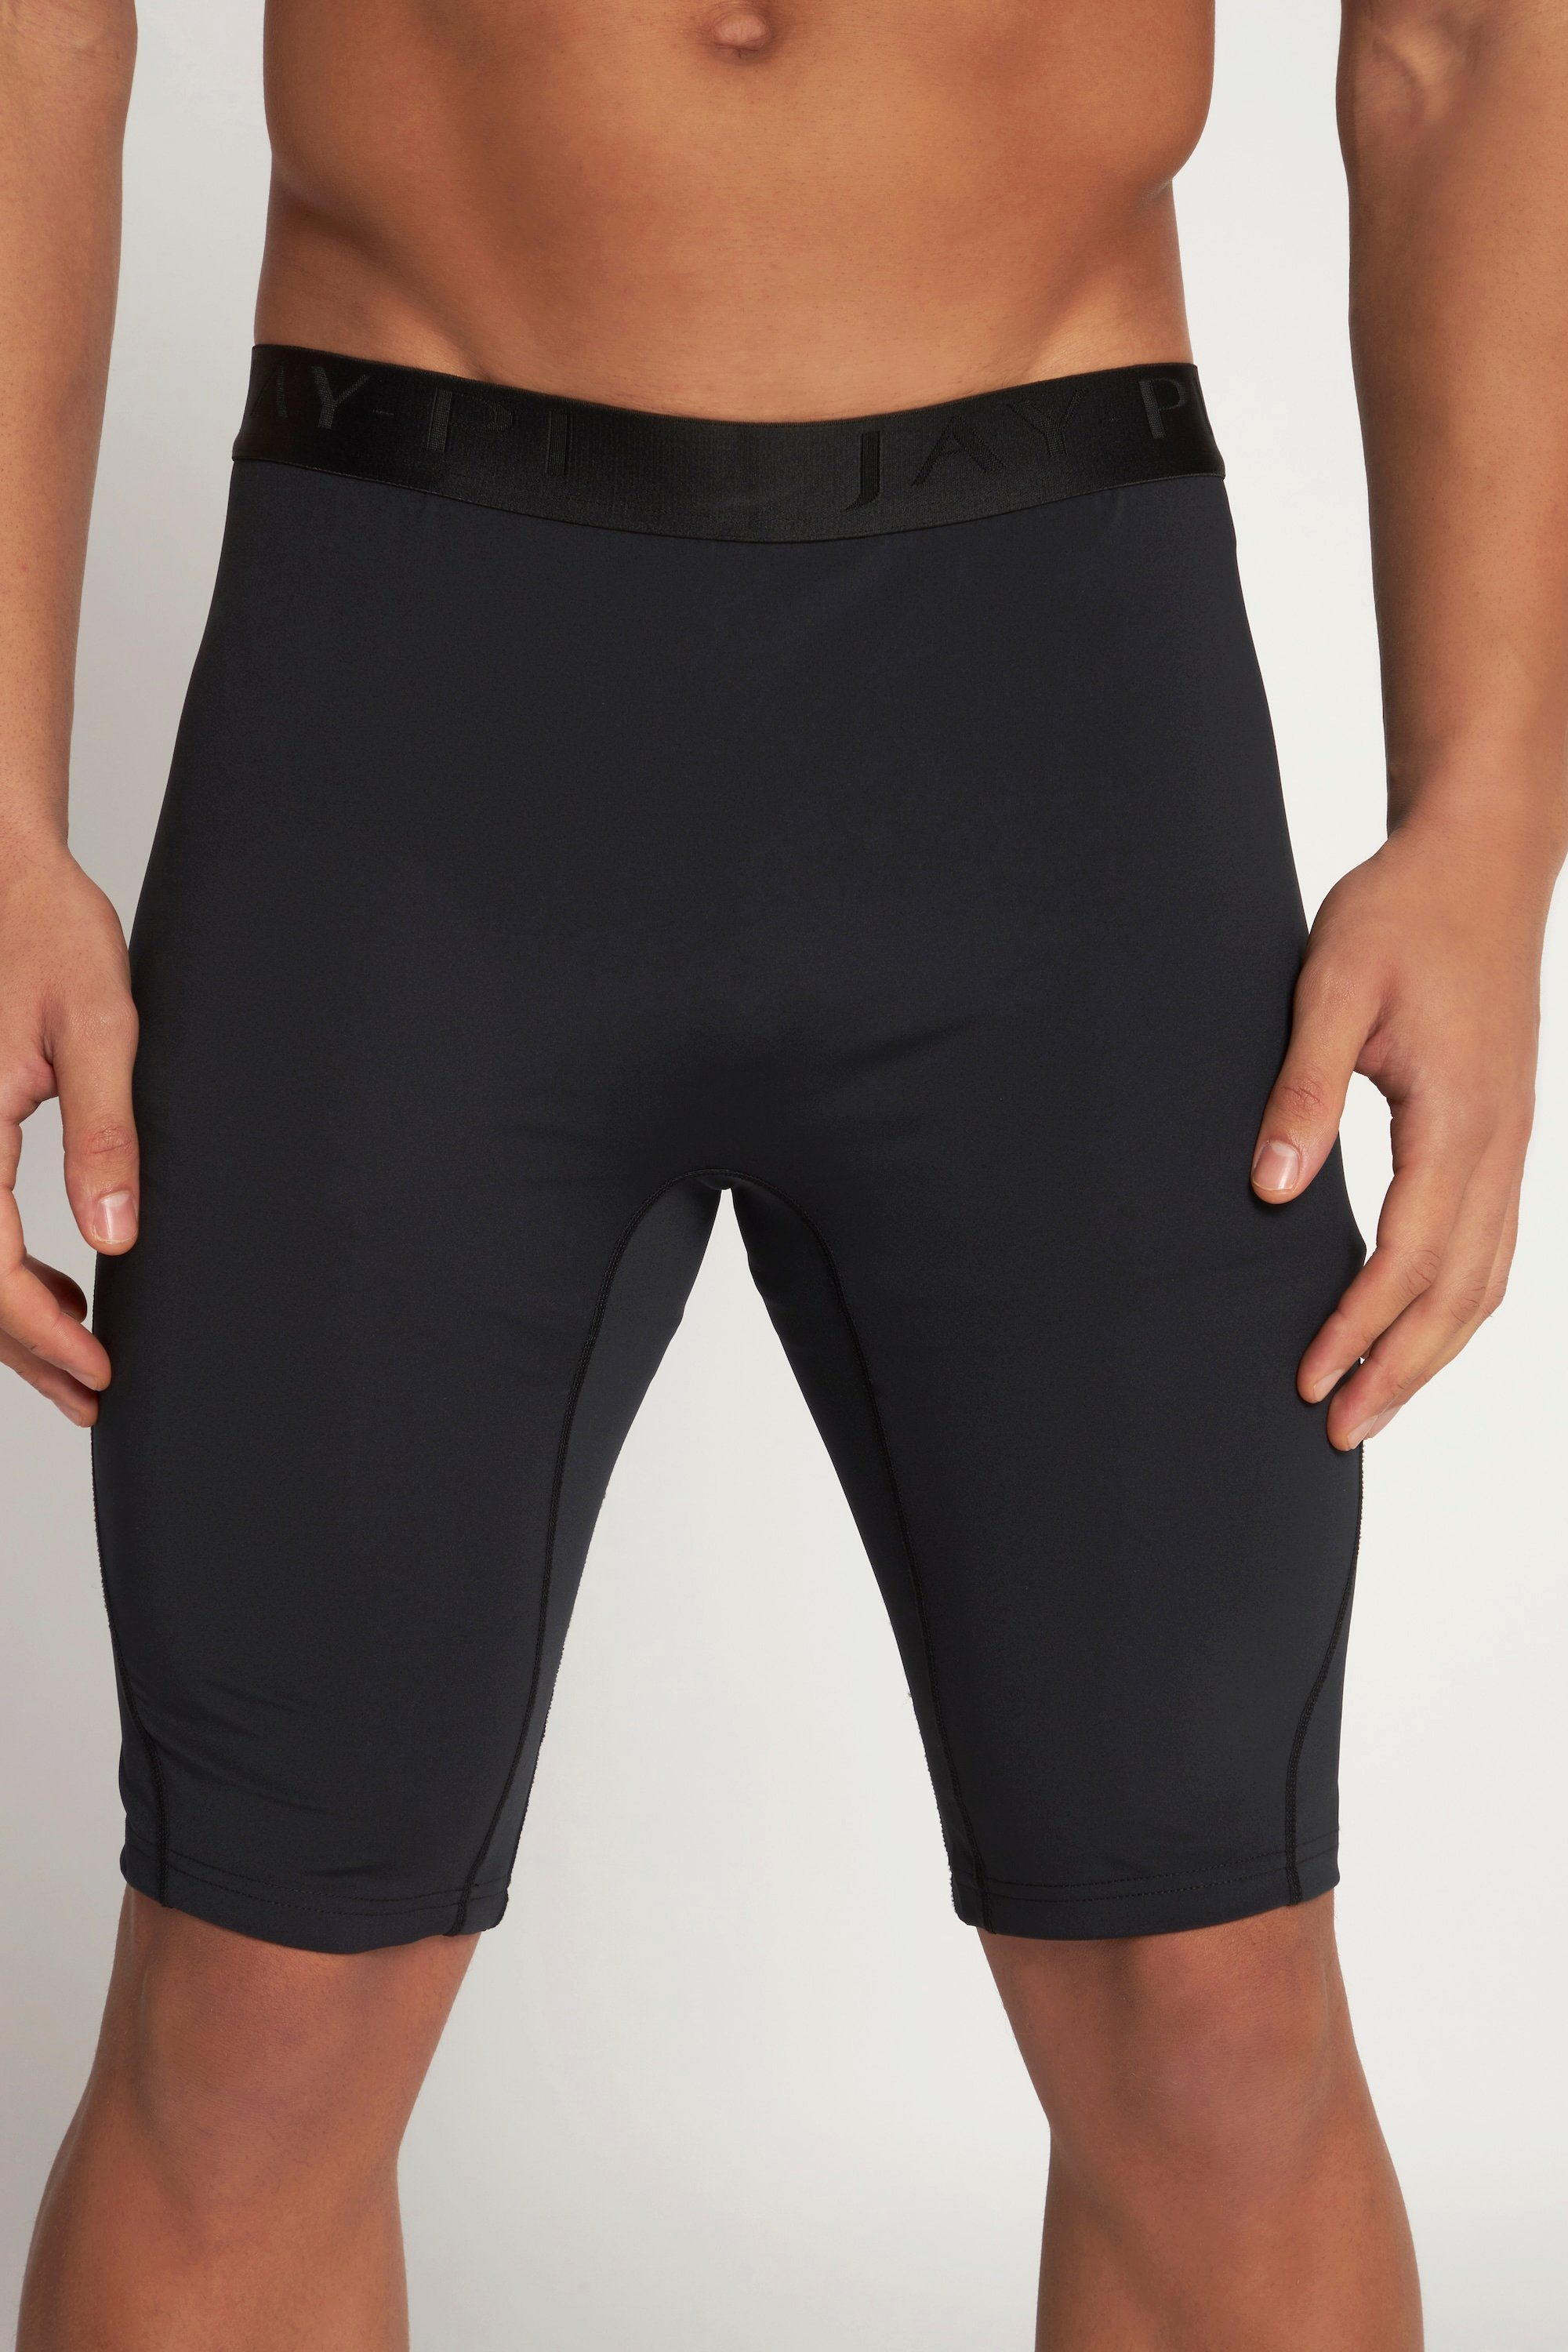 JP1880 Boxershorts Longpants Fitness Unterhose schwarz | Boxershorts